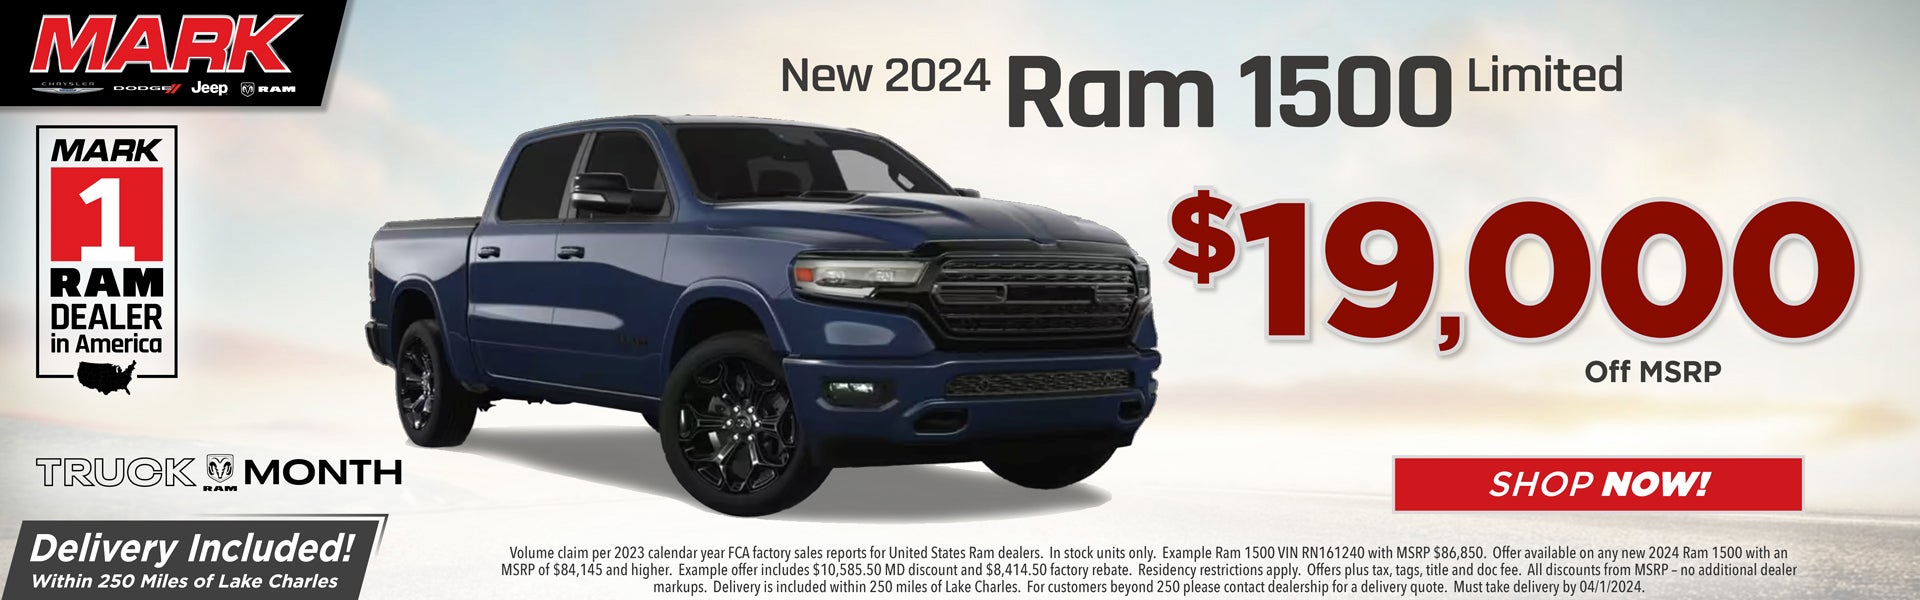 Ram 1500 Limited